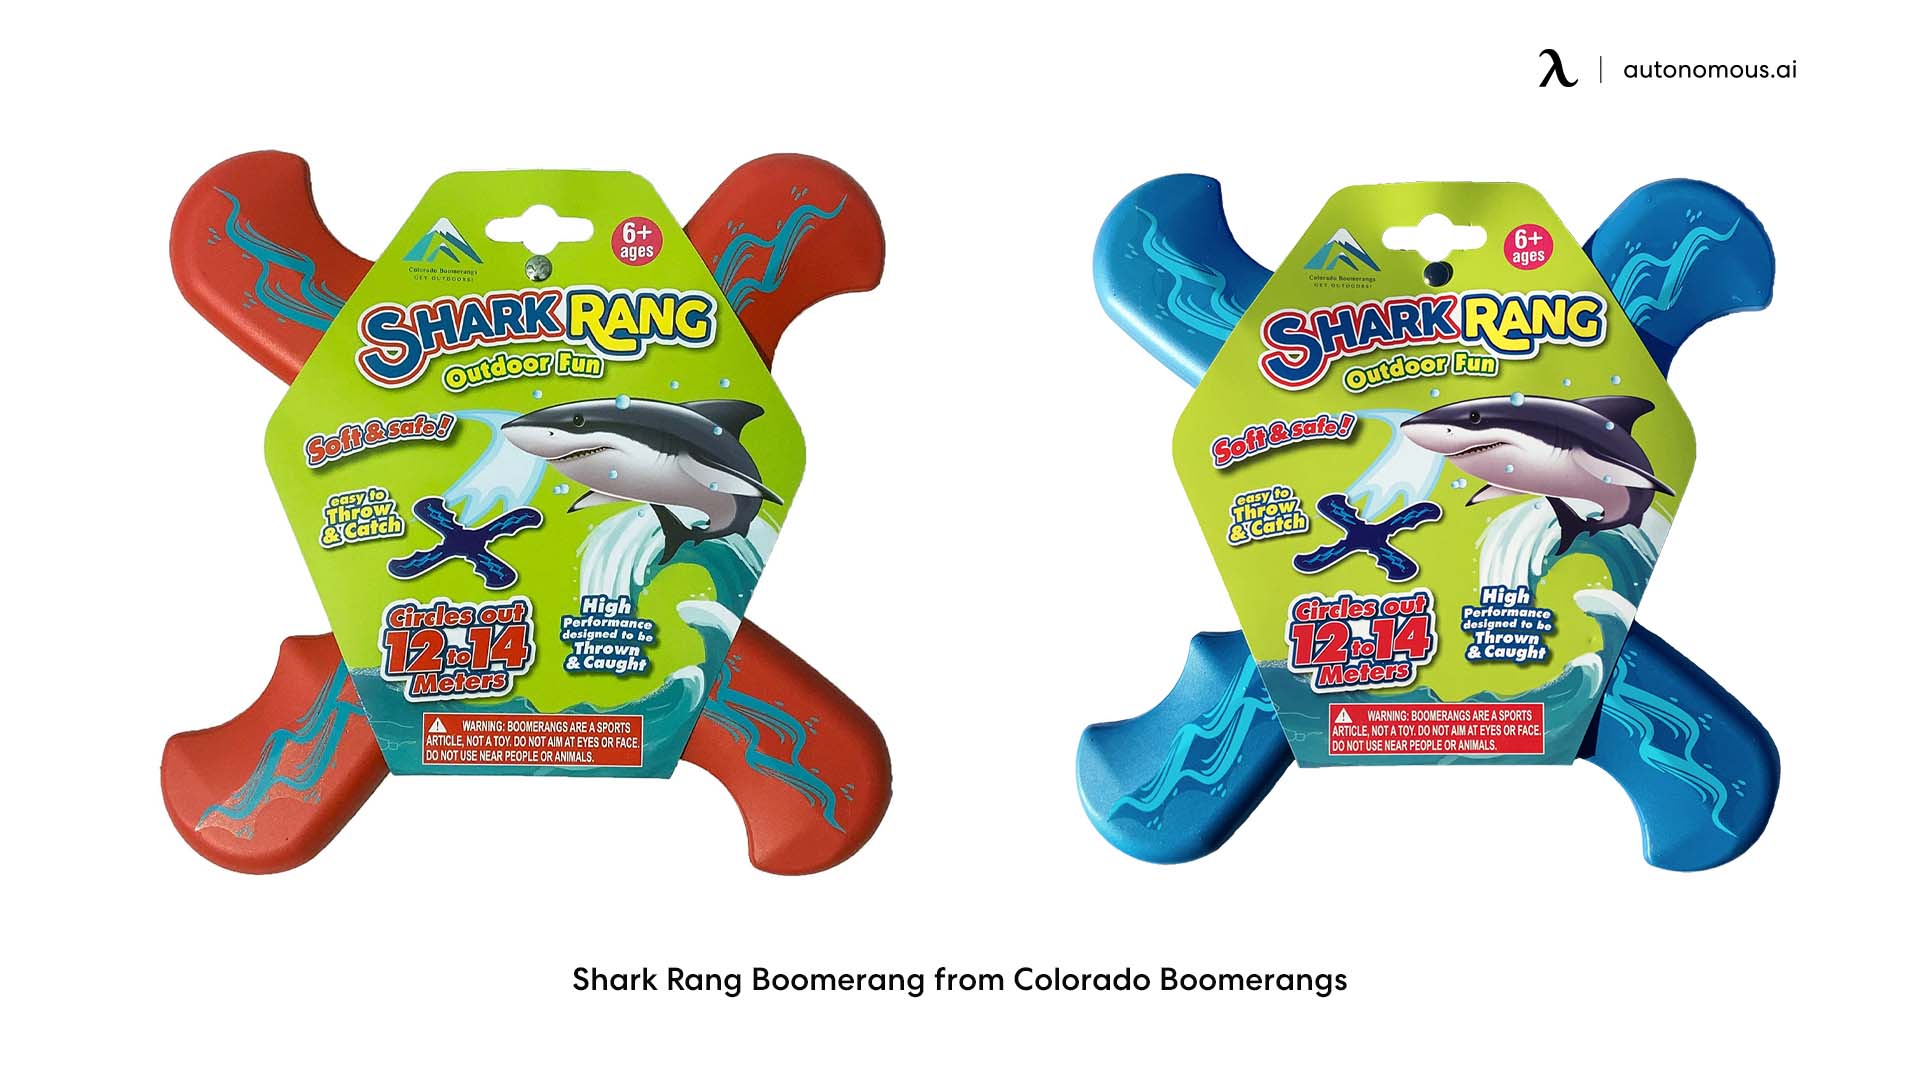 Shark Rang Boomerang from Colorado Boomerangs